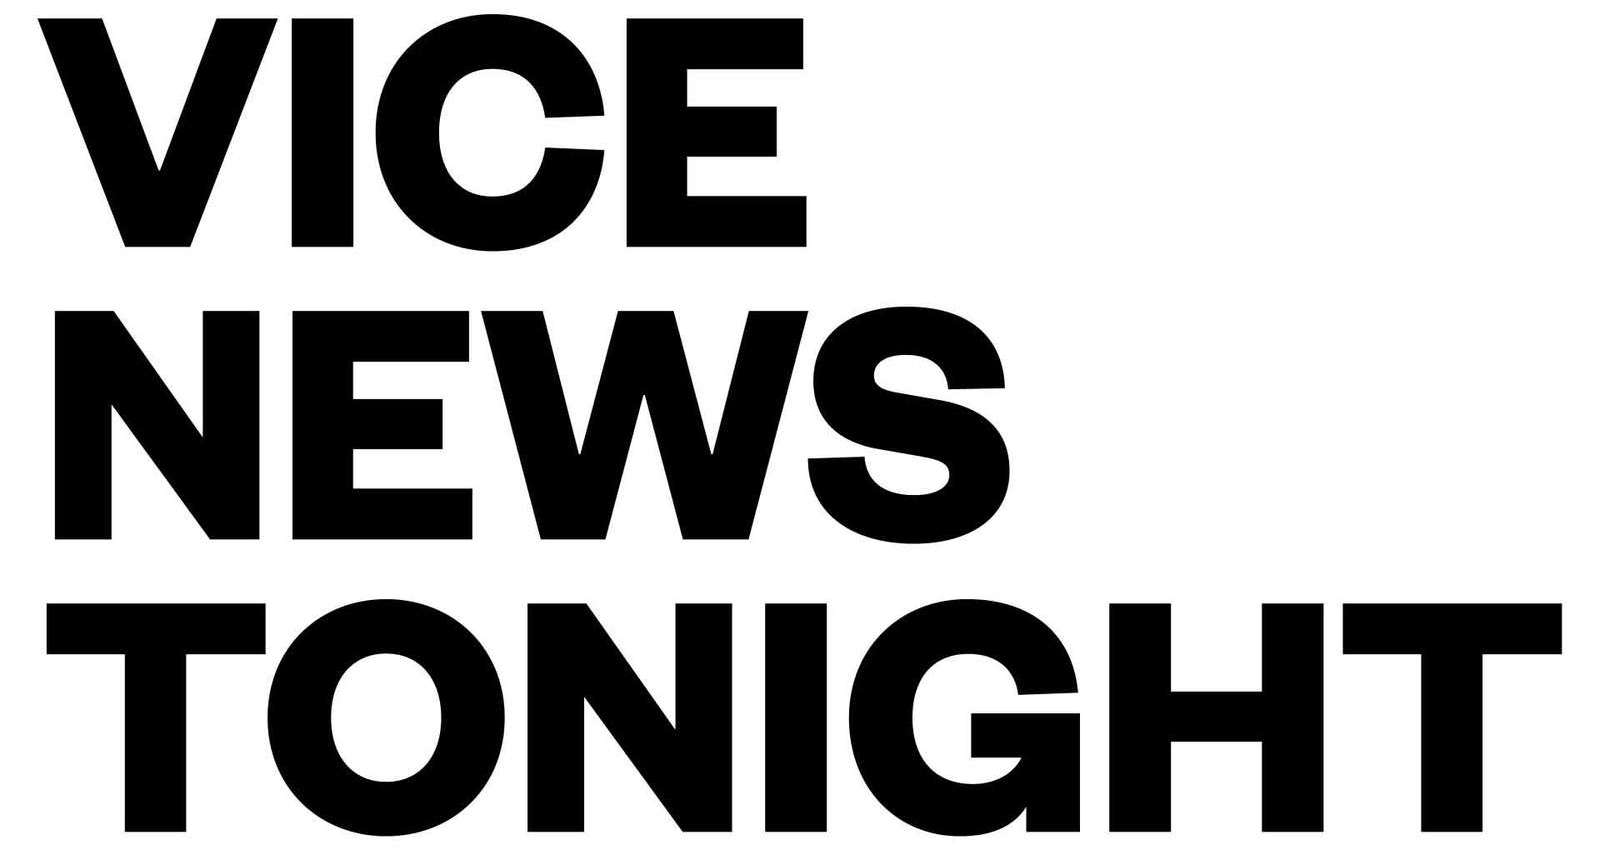 VICE News Tonight